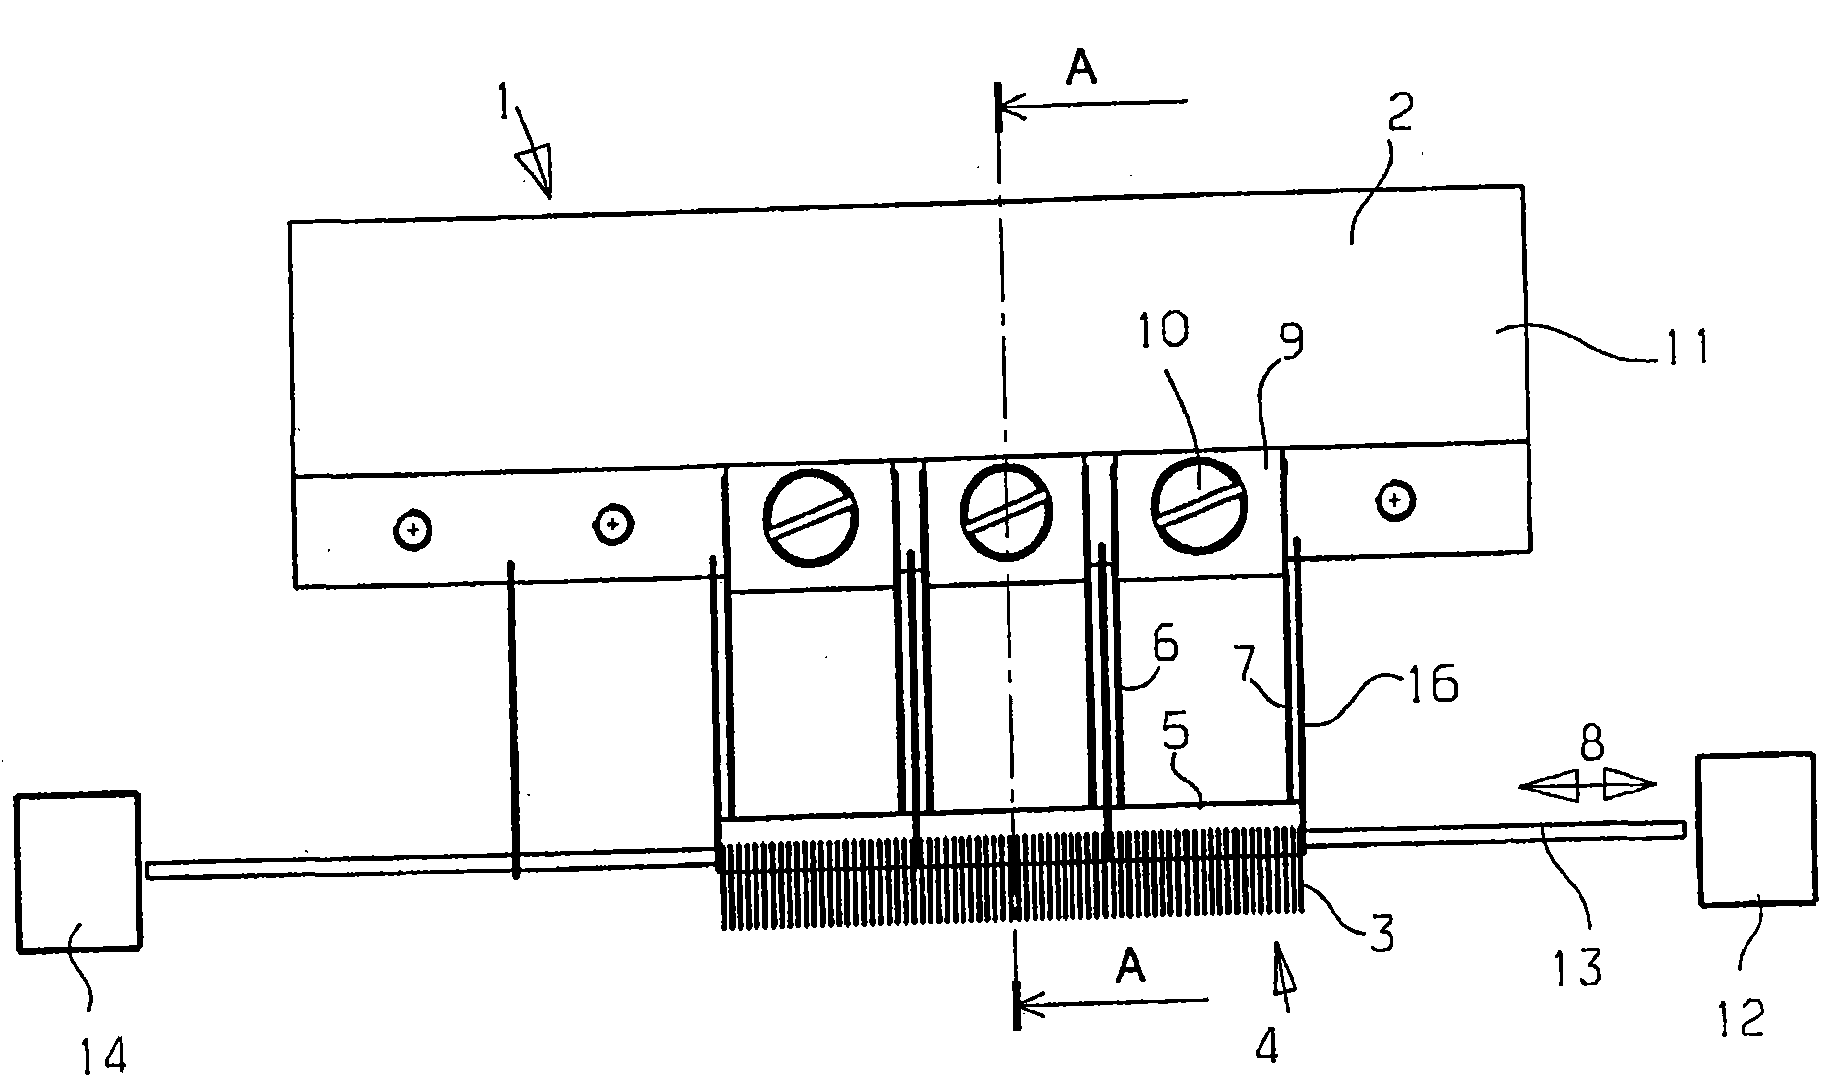 Guide bar arrangement of warp knitting machine